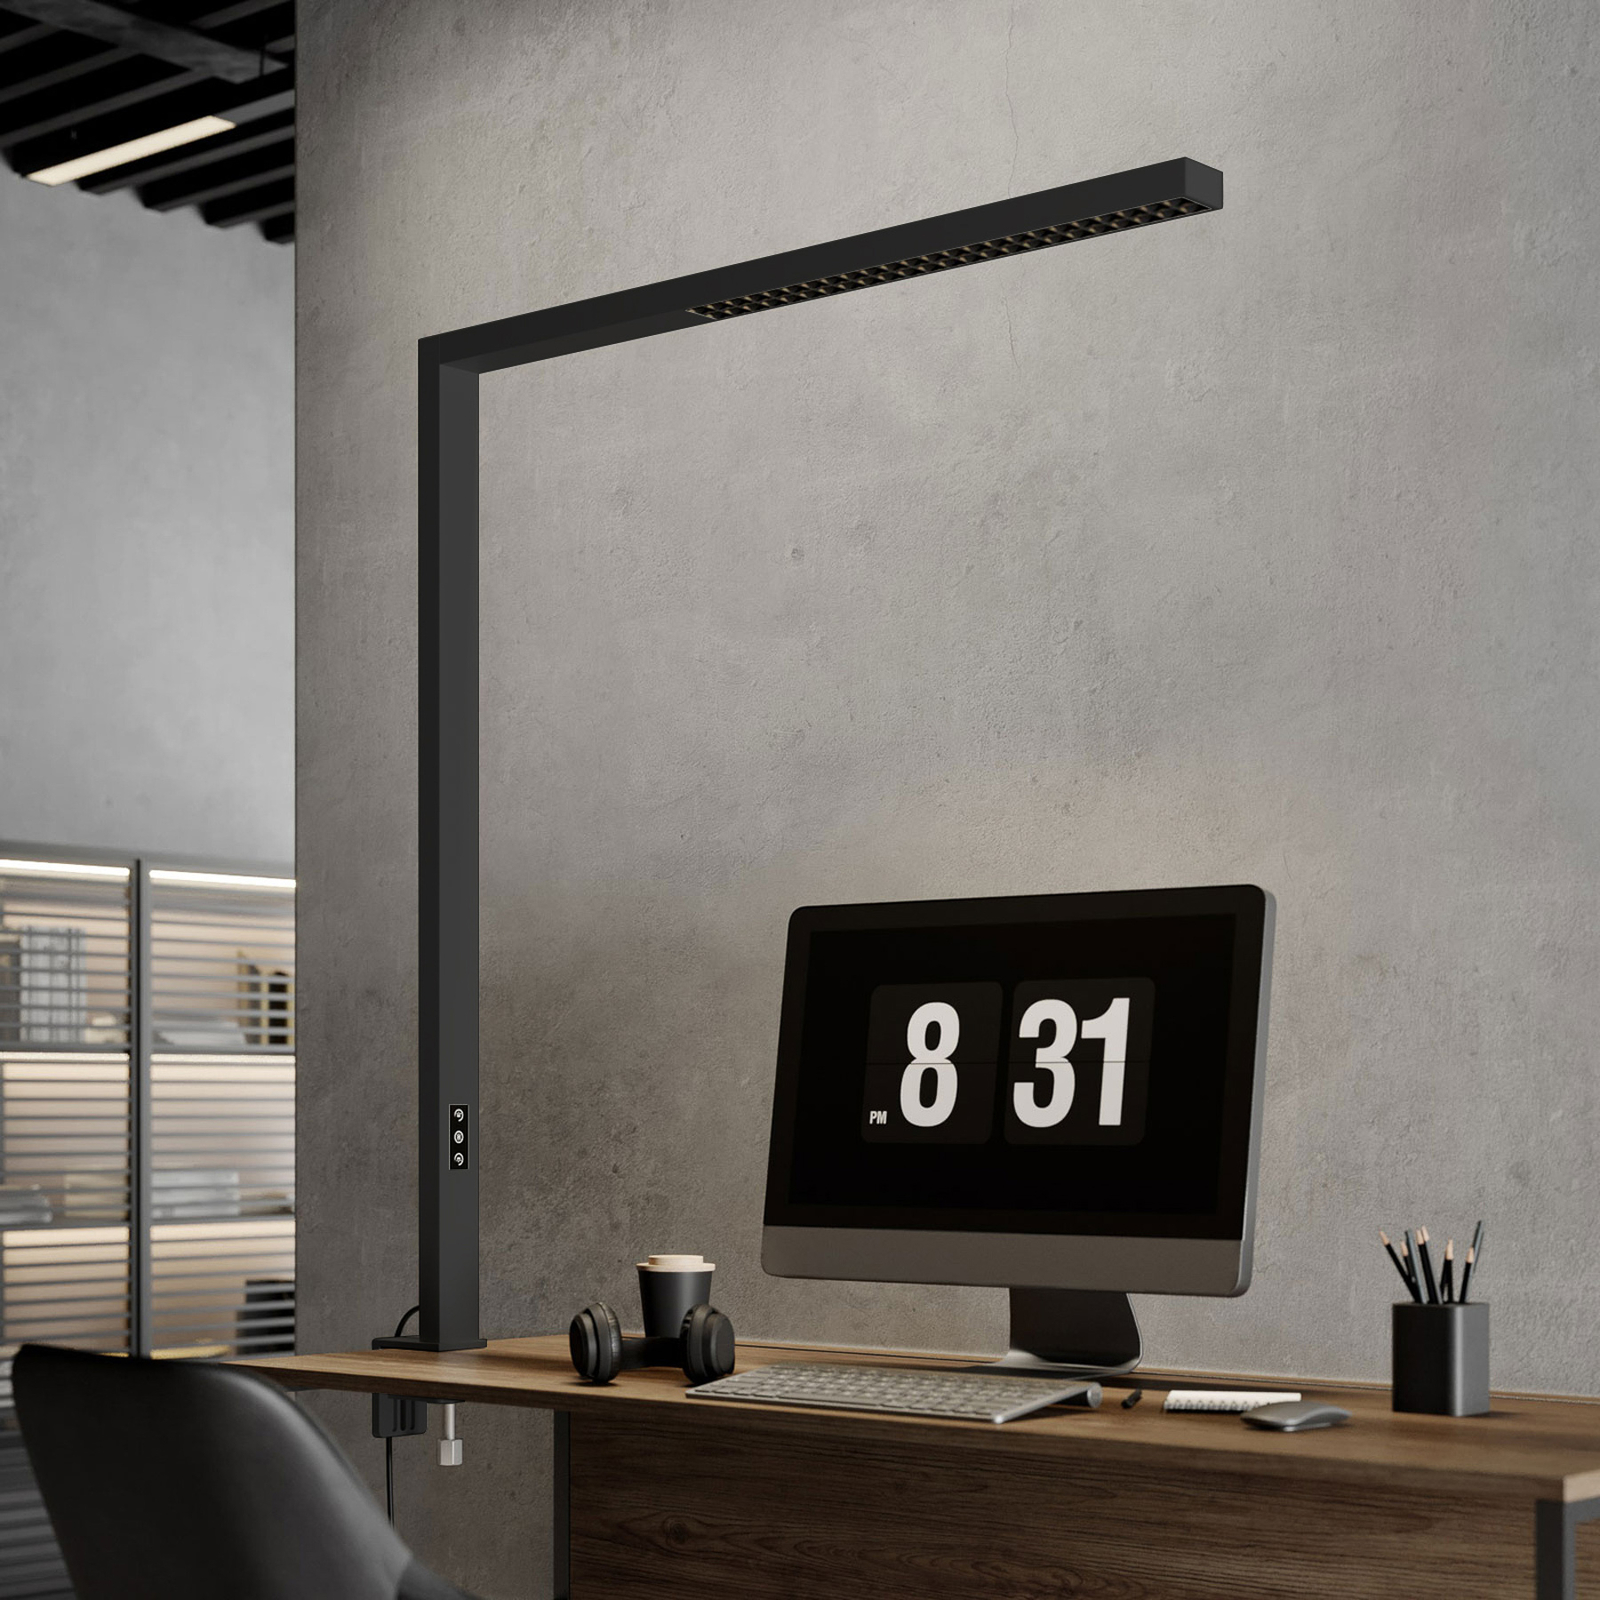 Arcchio Jolinda LED clip-on light, black, dimmable